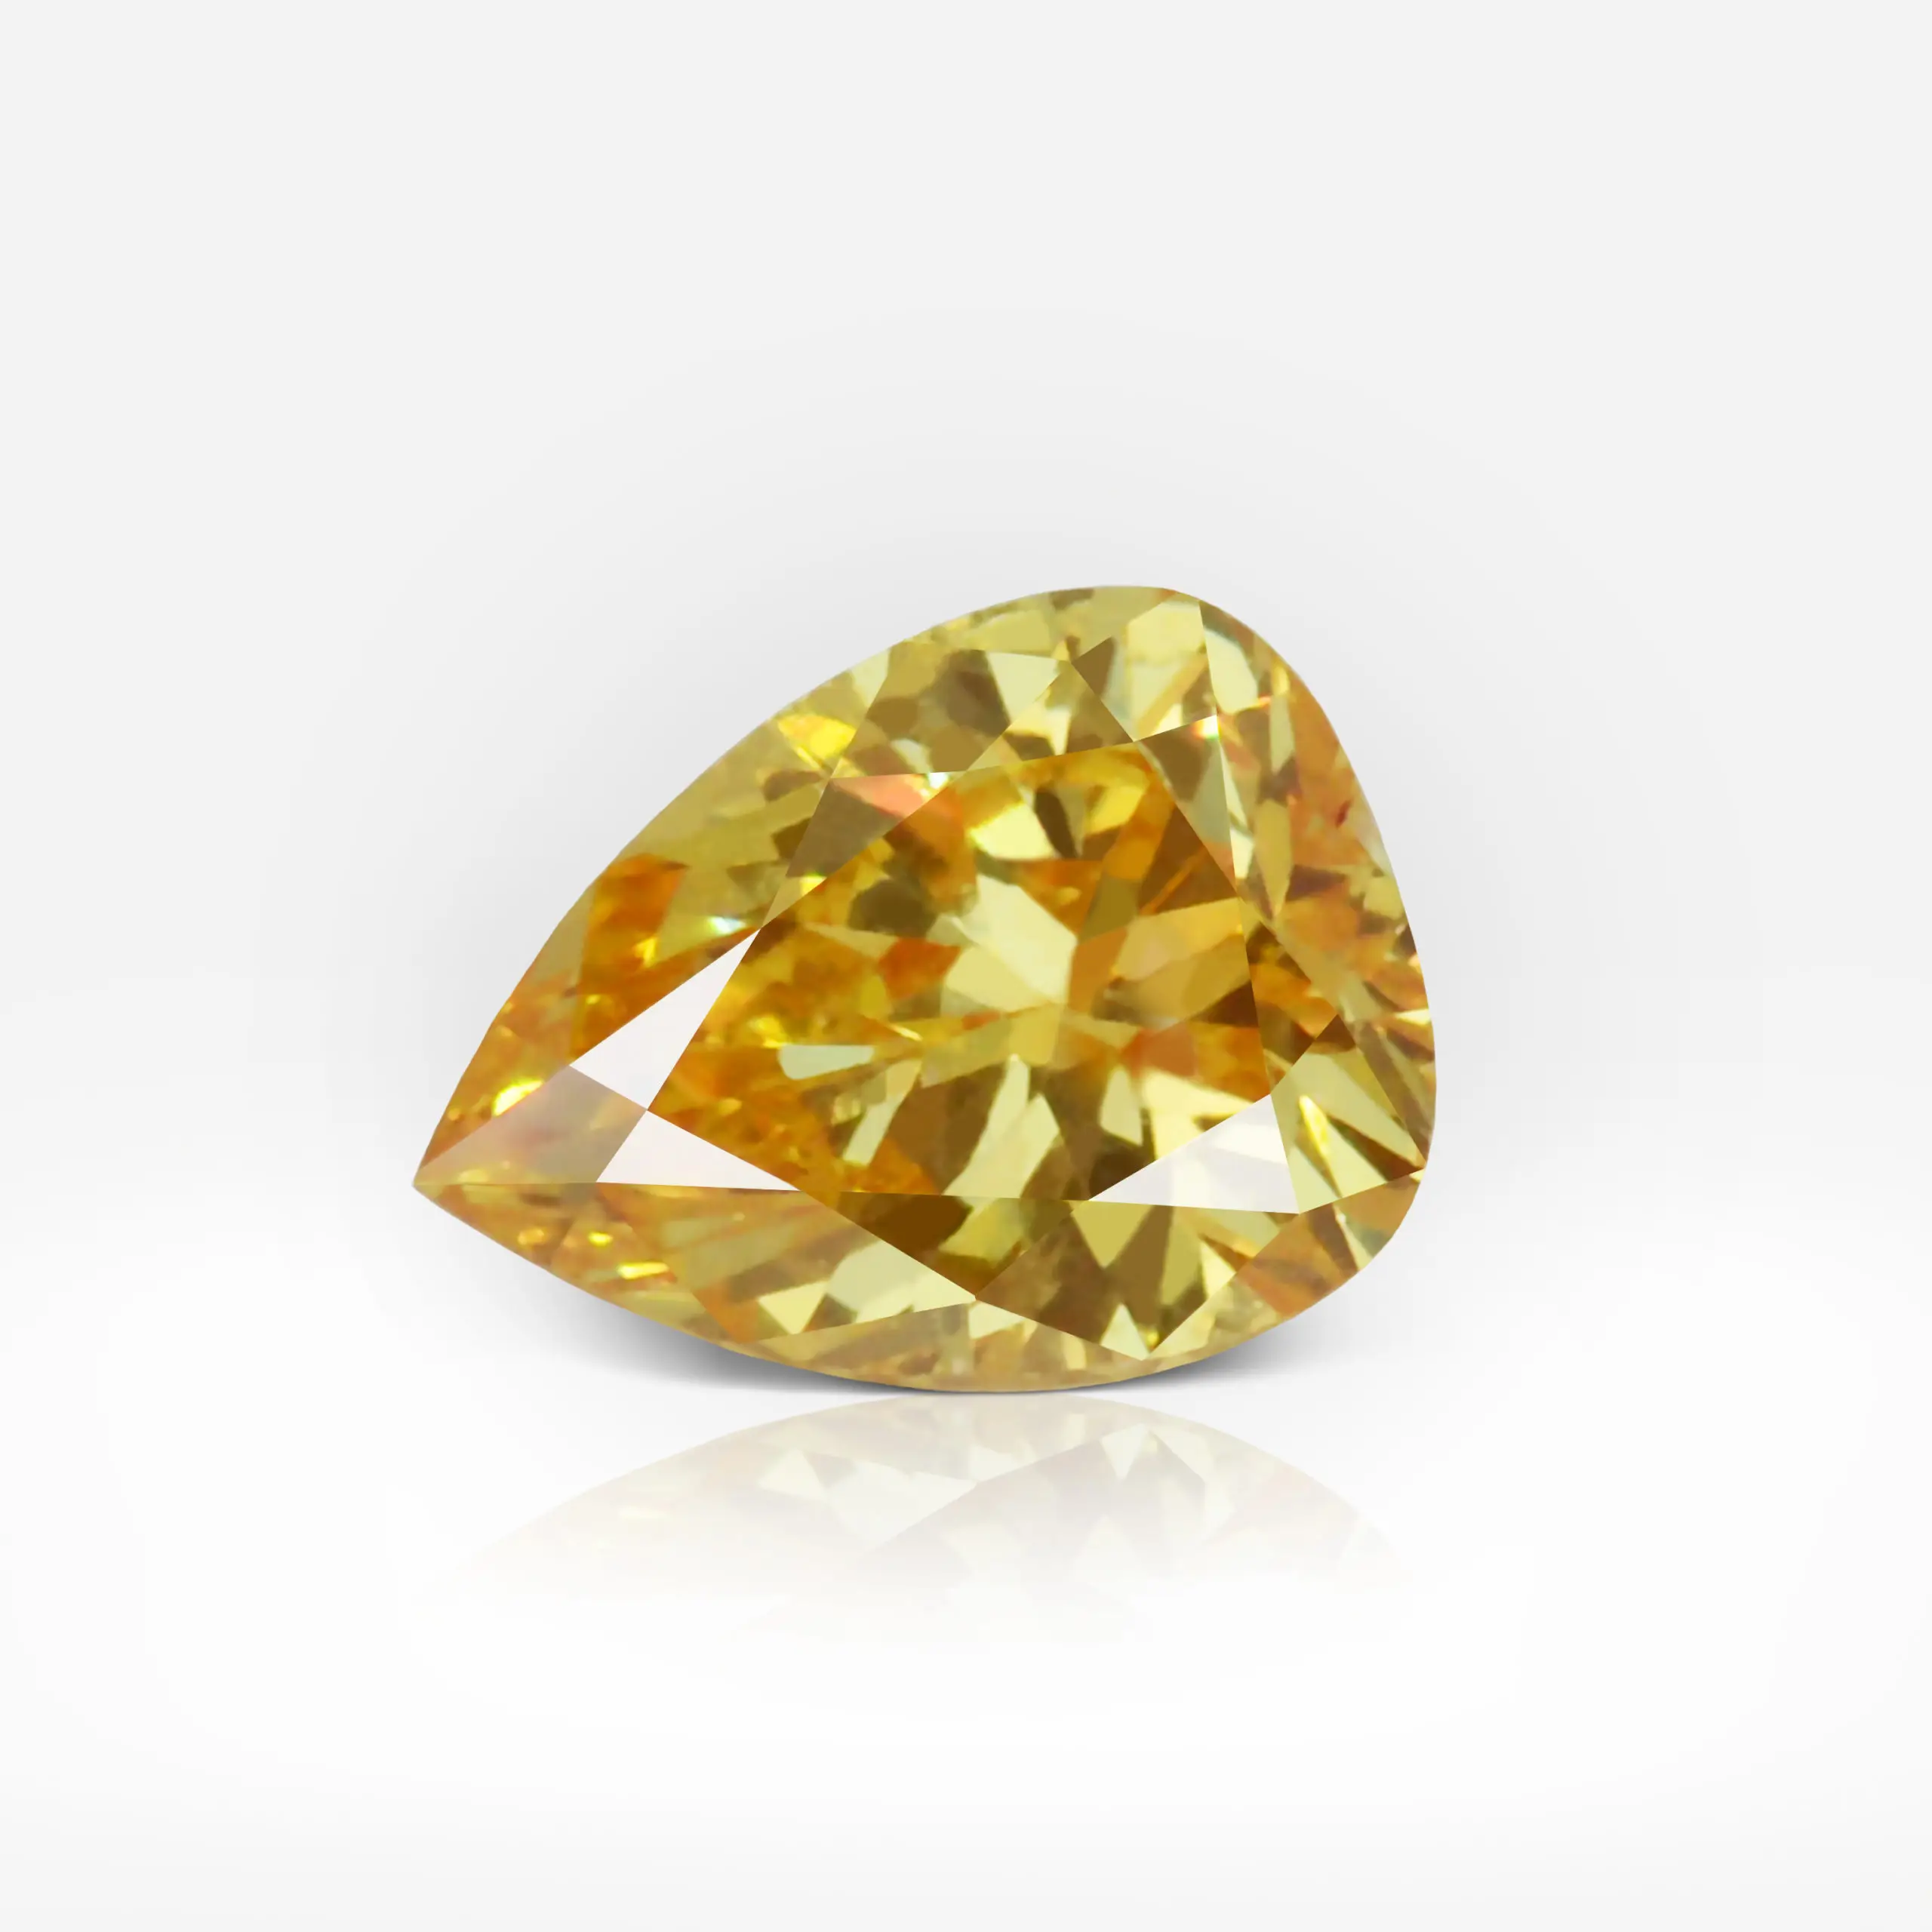 0.14 carat Fancy Intense Orange Yellow Pear Shape Diamond GIA - picture 1